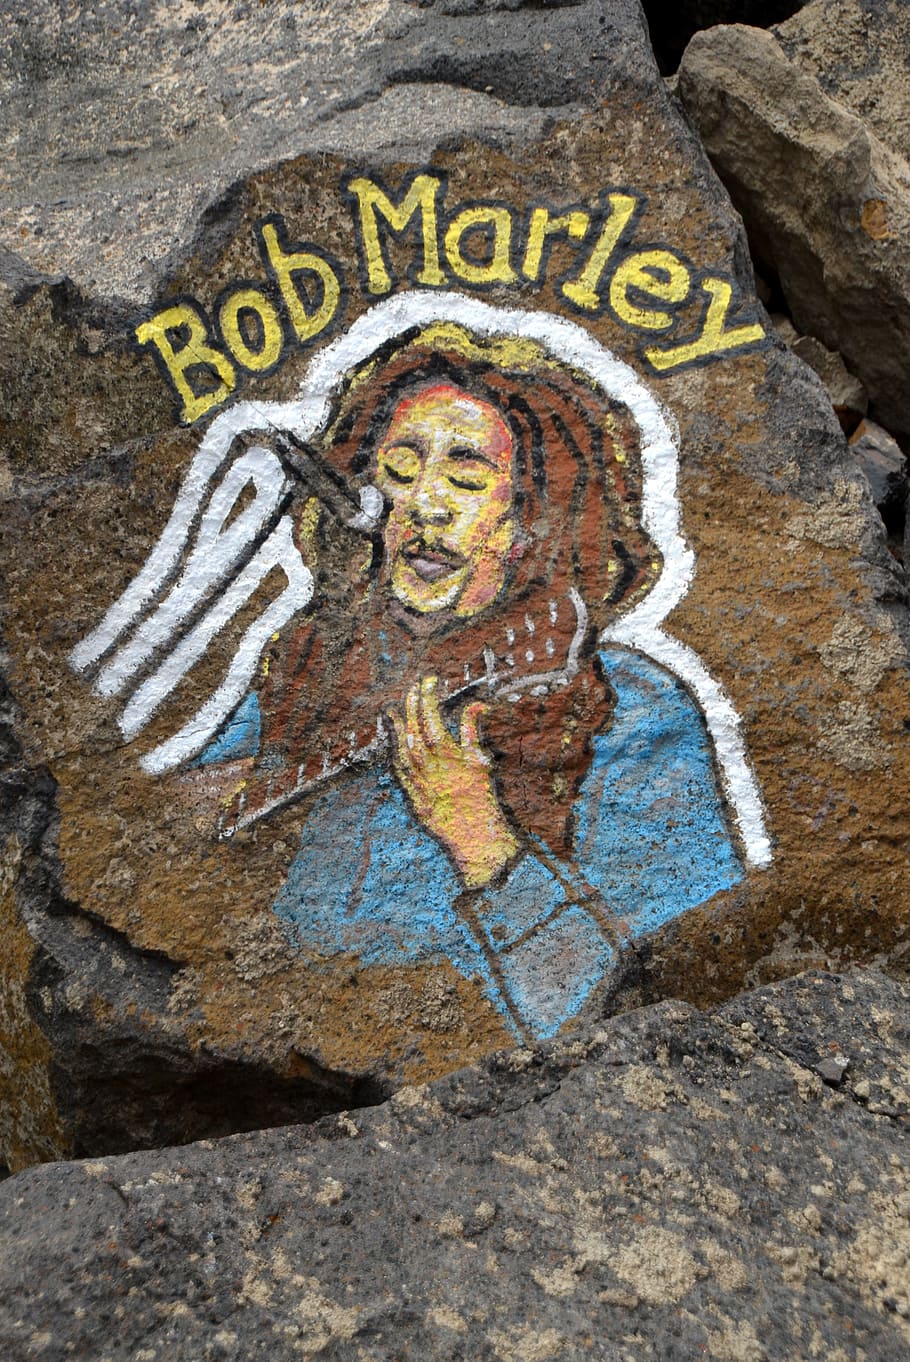 bob marley painting, stone, Bob Marley, Hippie, Reggae, marley, jamaica, marijuana, painting, dream